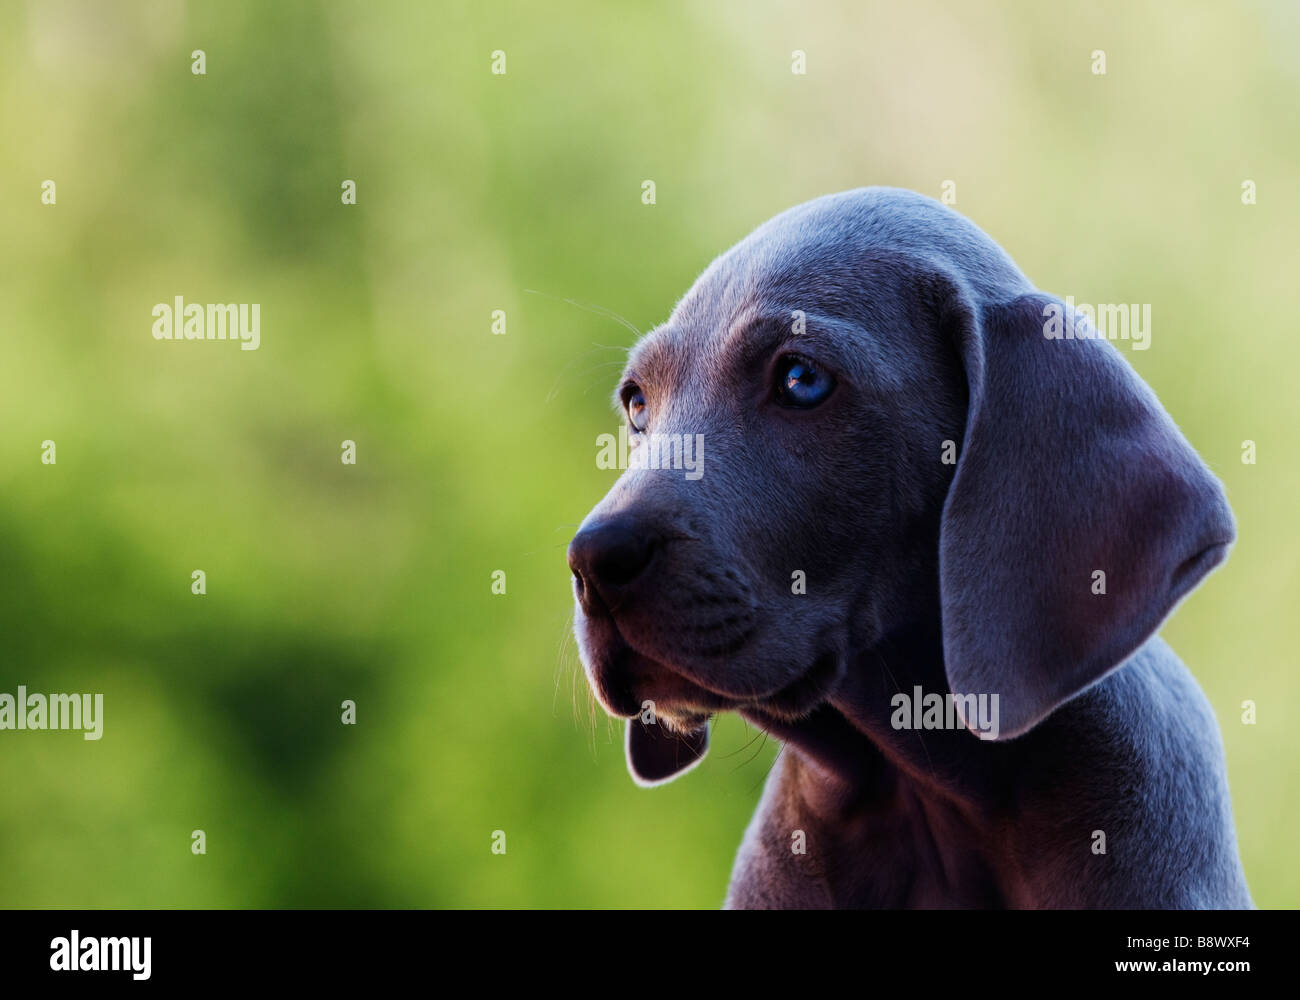 A portrait of a Weimaraner puppy Stock Photo